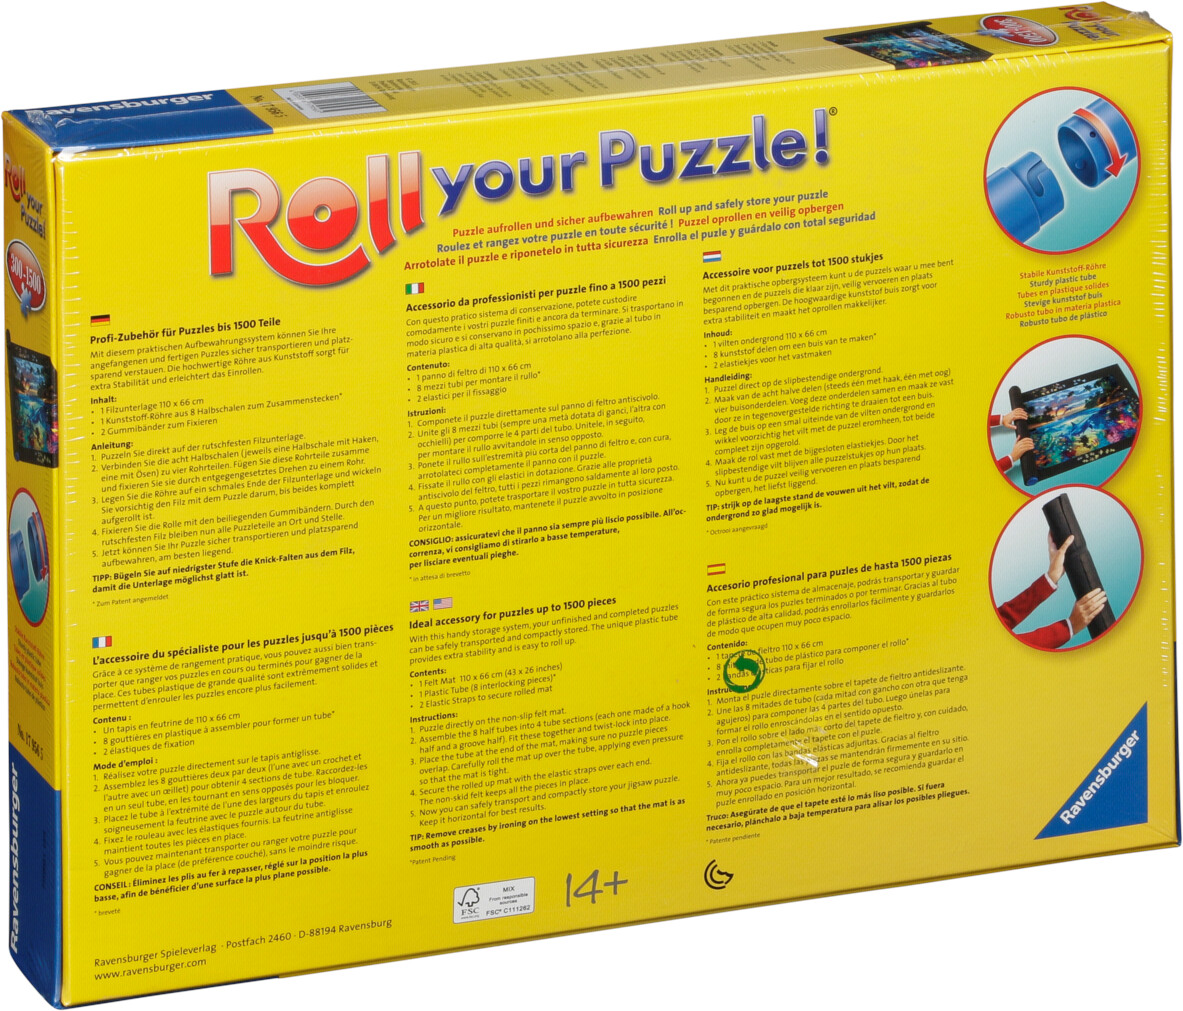 Roll Preisvergleich | Ravensburger Puzzle! bei ab € 11,98 your